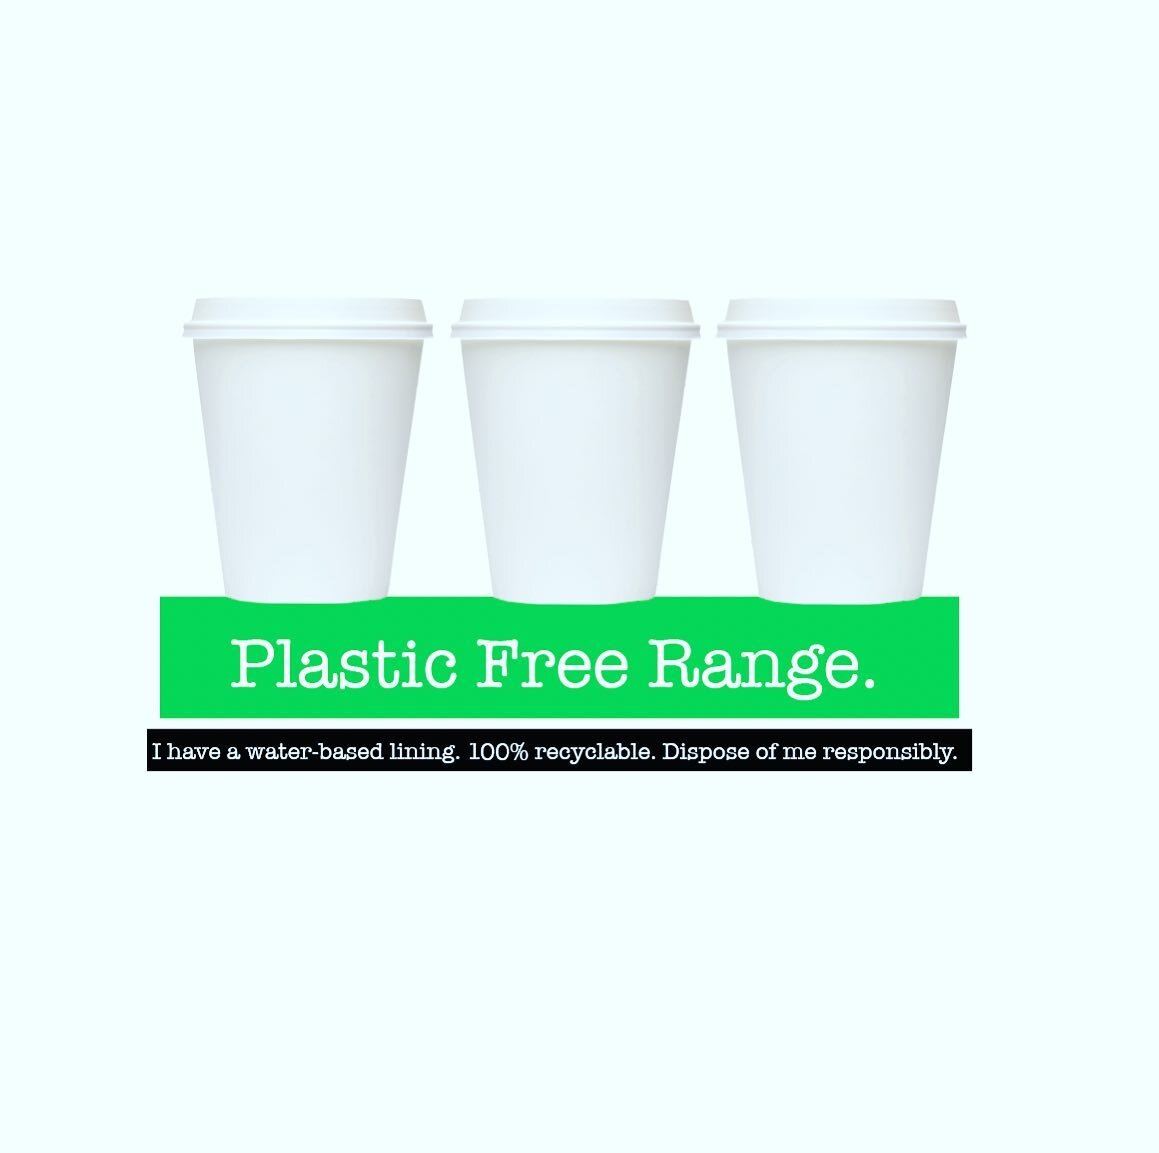 ⚡️NEW 🌏 
Plastic free coffee cups. 
Affordable, durable, recyclable.
.
.
.
.
.
.
.
.
.
.
.
#plasticfreecoffeecups #plasticfree #plasticfreeliving #savetheplanet #envirocups #enviropak #enviromentallyfriendly #consciouscups #saynotoplastic